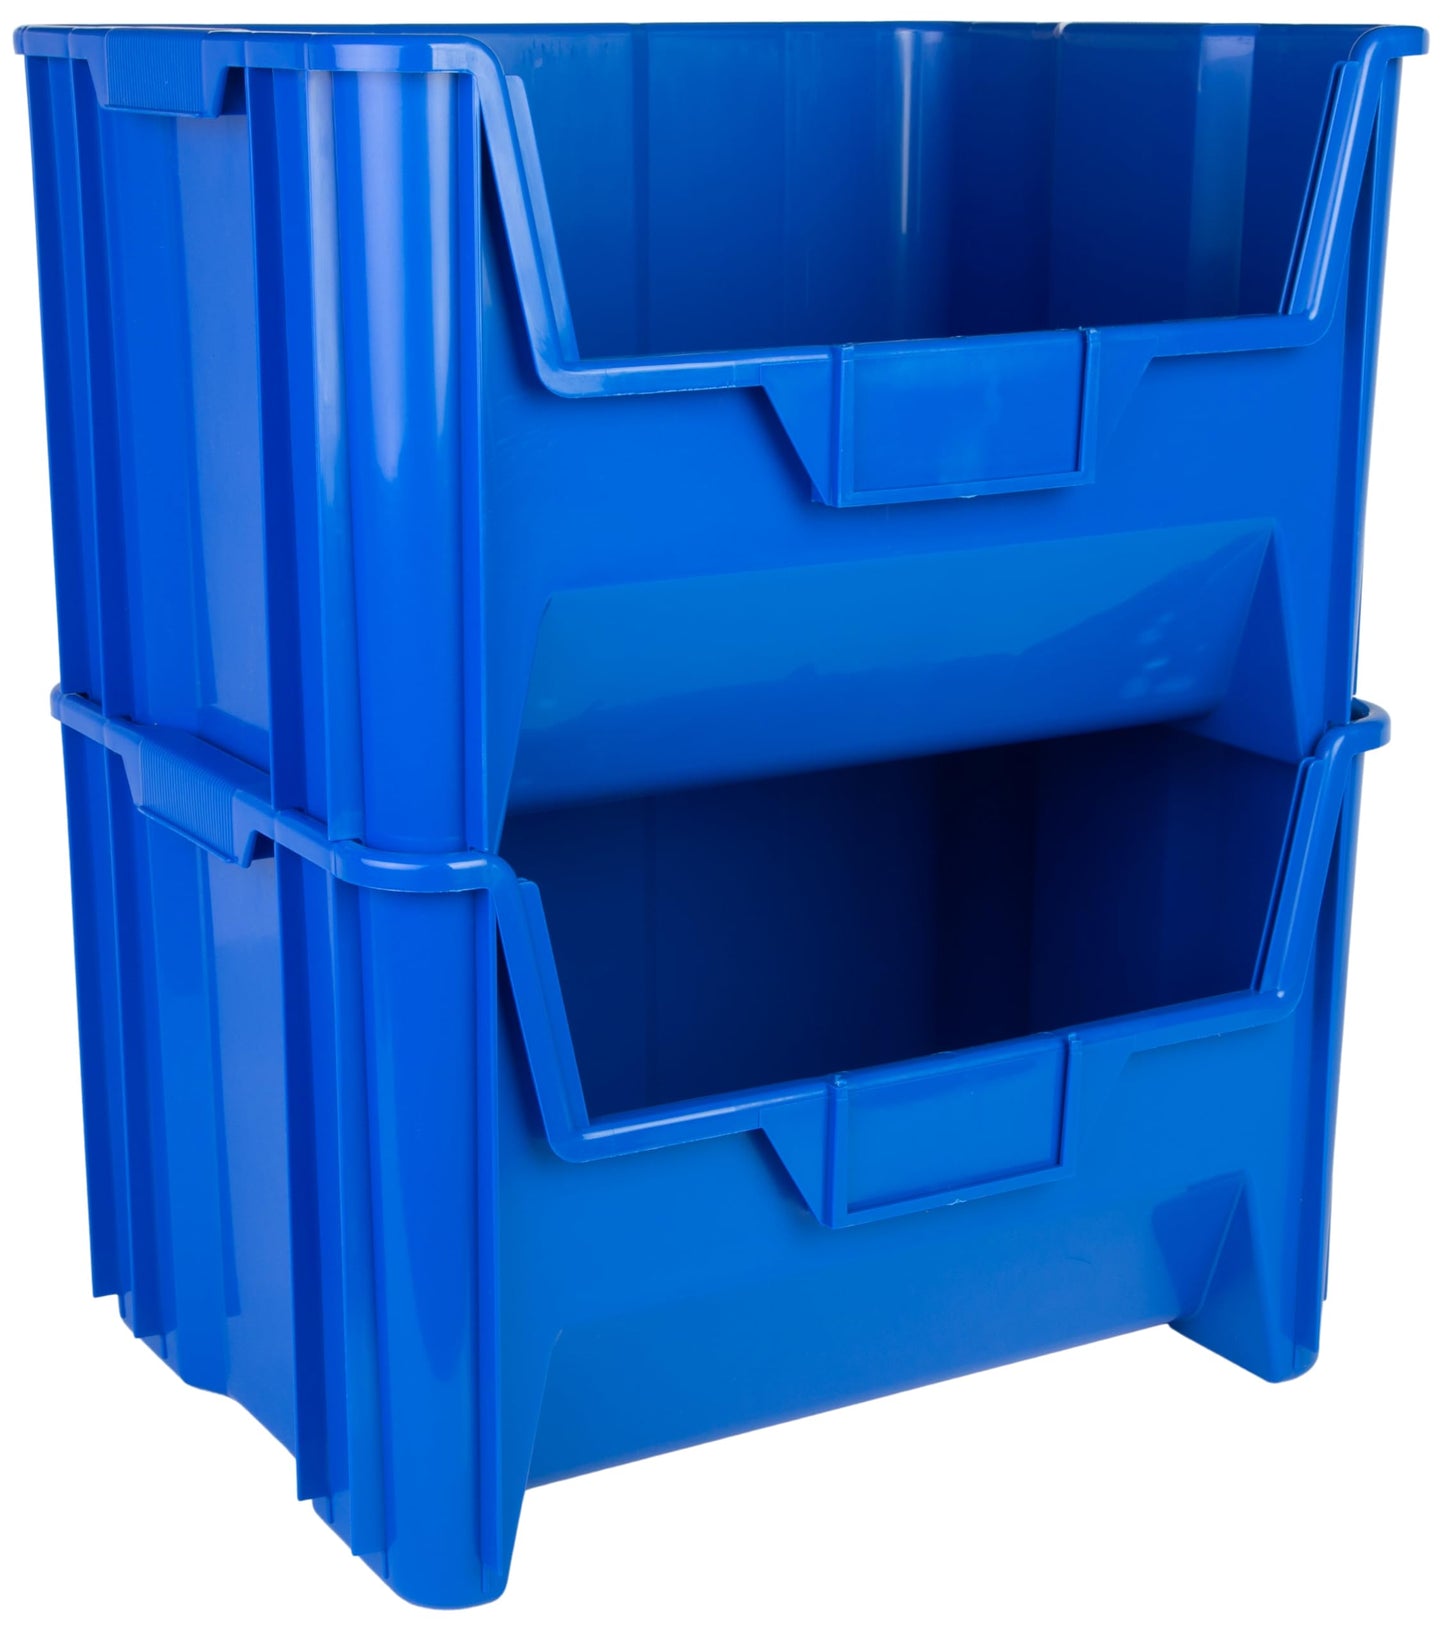 Hudson Exchange 20 x 15 x 12.5" Plastic Giant Stackable Hopper Bin Container